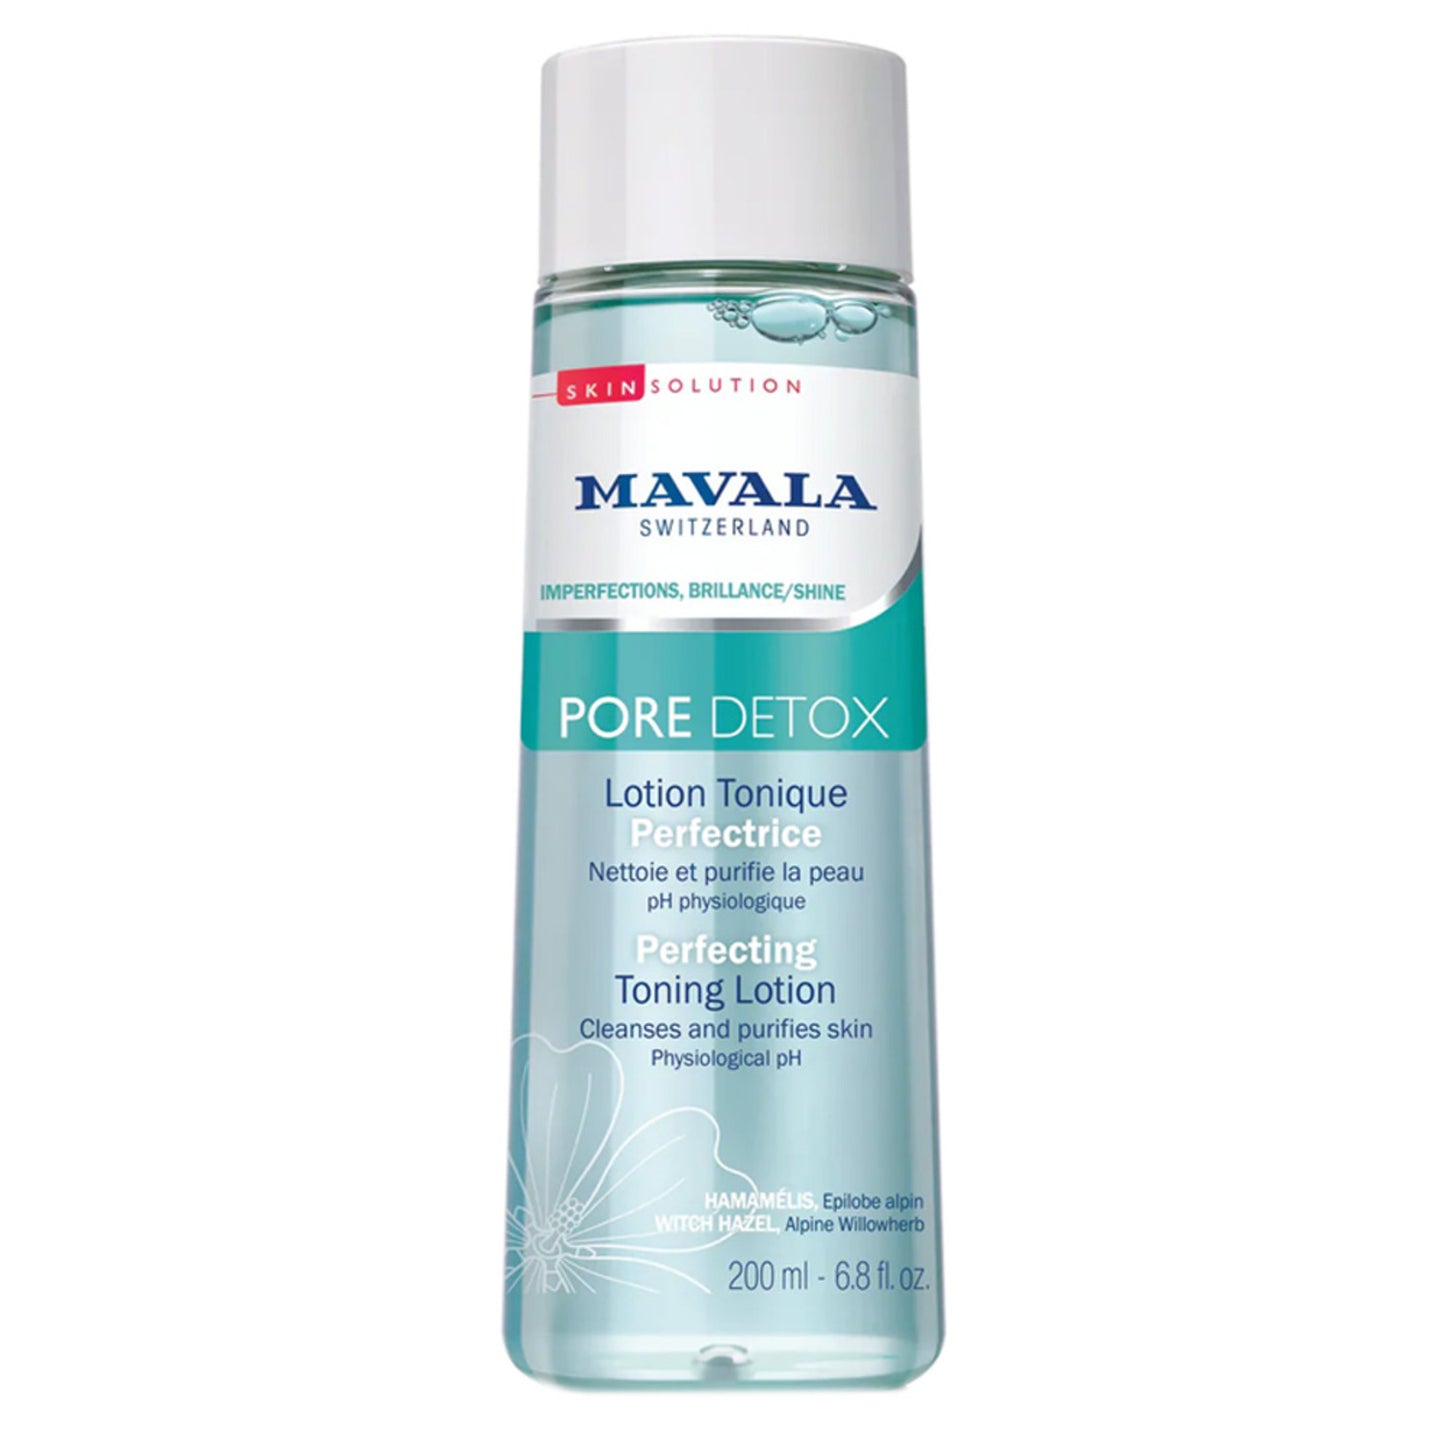 MAVALA Skin Solution Pore Detox Perfecting Toning Lotion